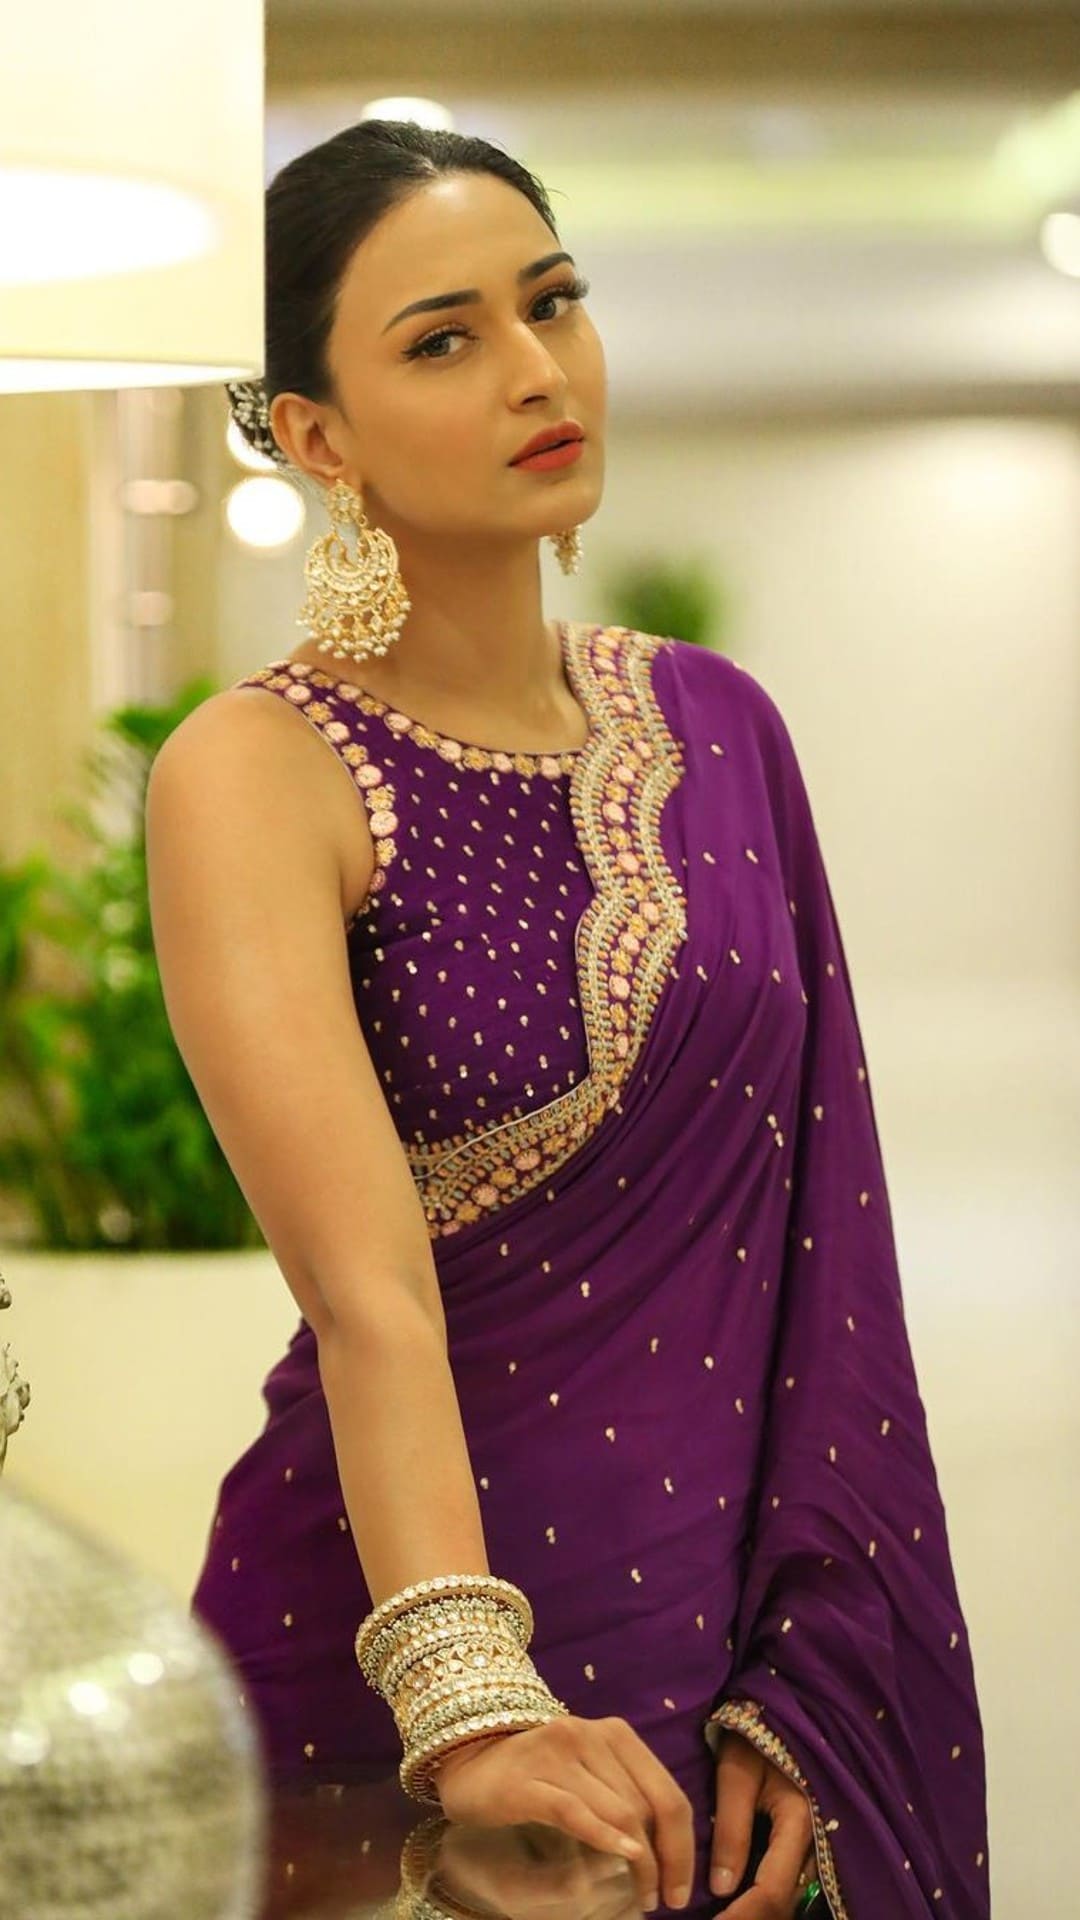 Recreate 5 Stylish Look For Karwa Chauth Inspired By Erica Fernandes Sarees  In Hindi | recreate stylish look for karwa chauth inspired by erica  fernandes sarees | HerZindagi